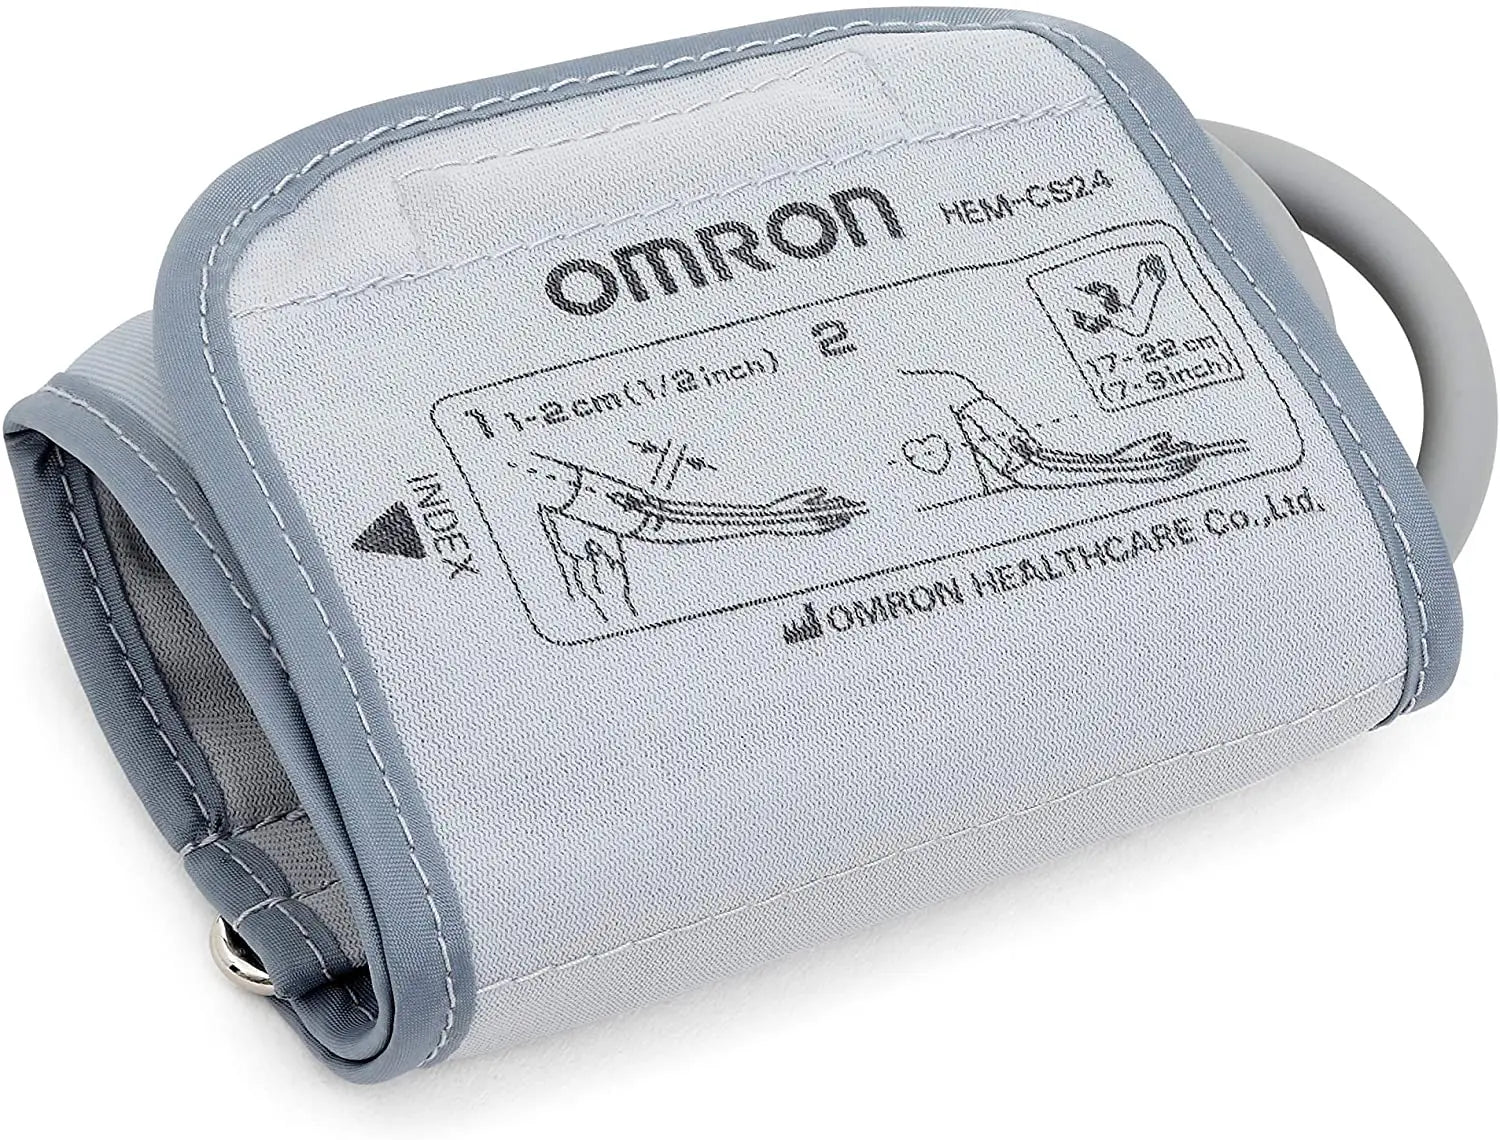 Omron Blood Pressure Monitor Cuff, Adult, Small - Ea/1